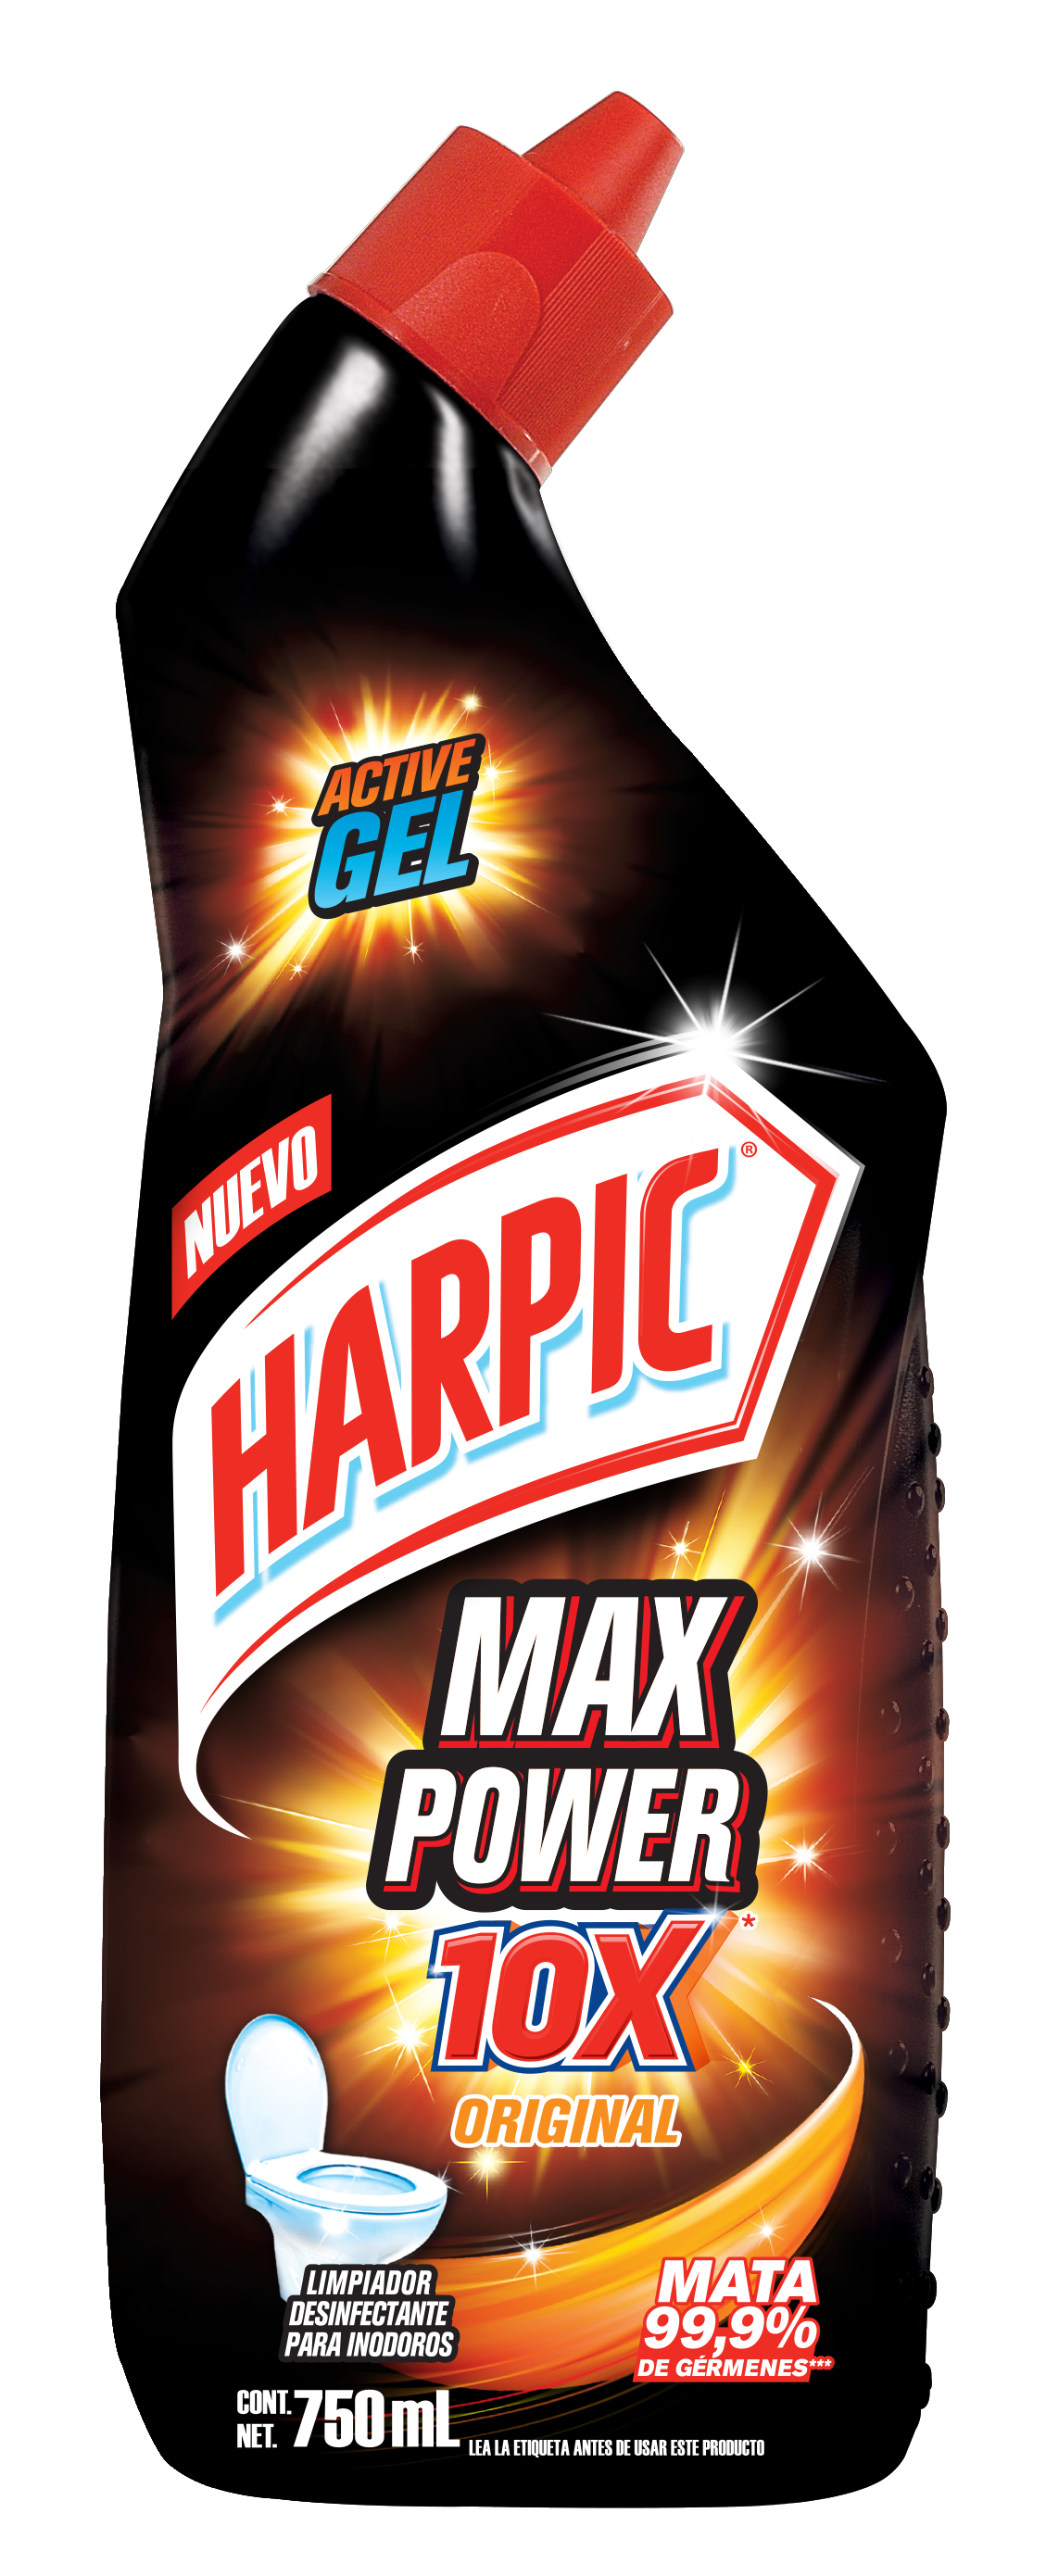 Harpic® Max Power 10x Original 750ml